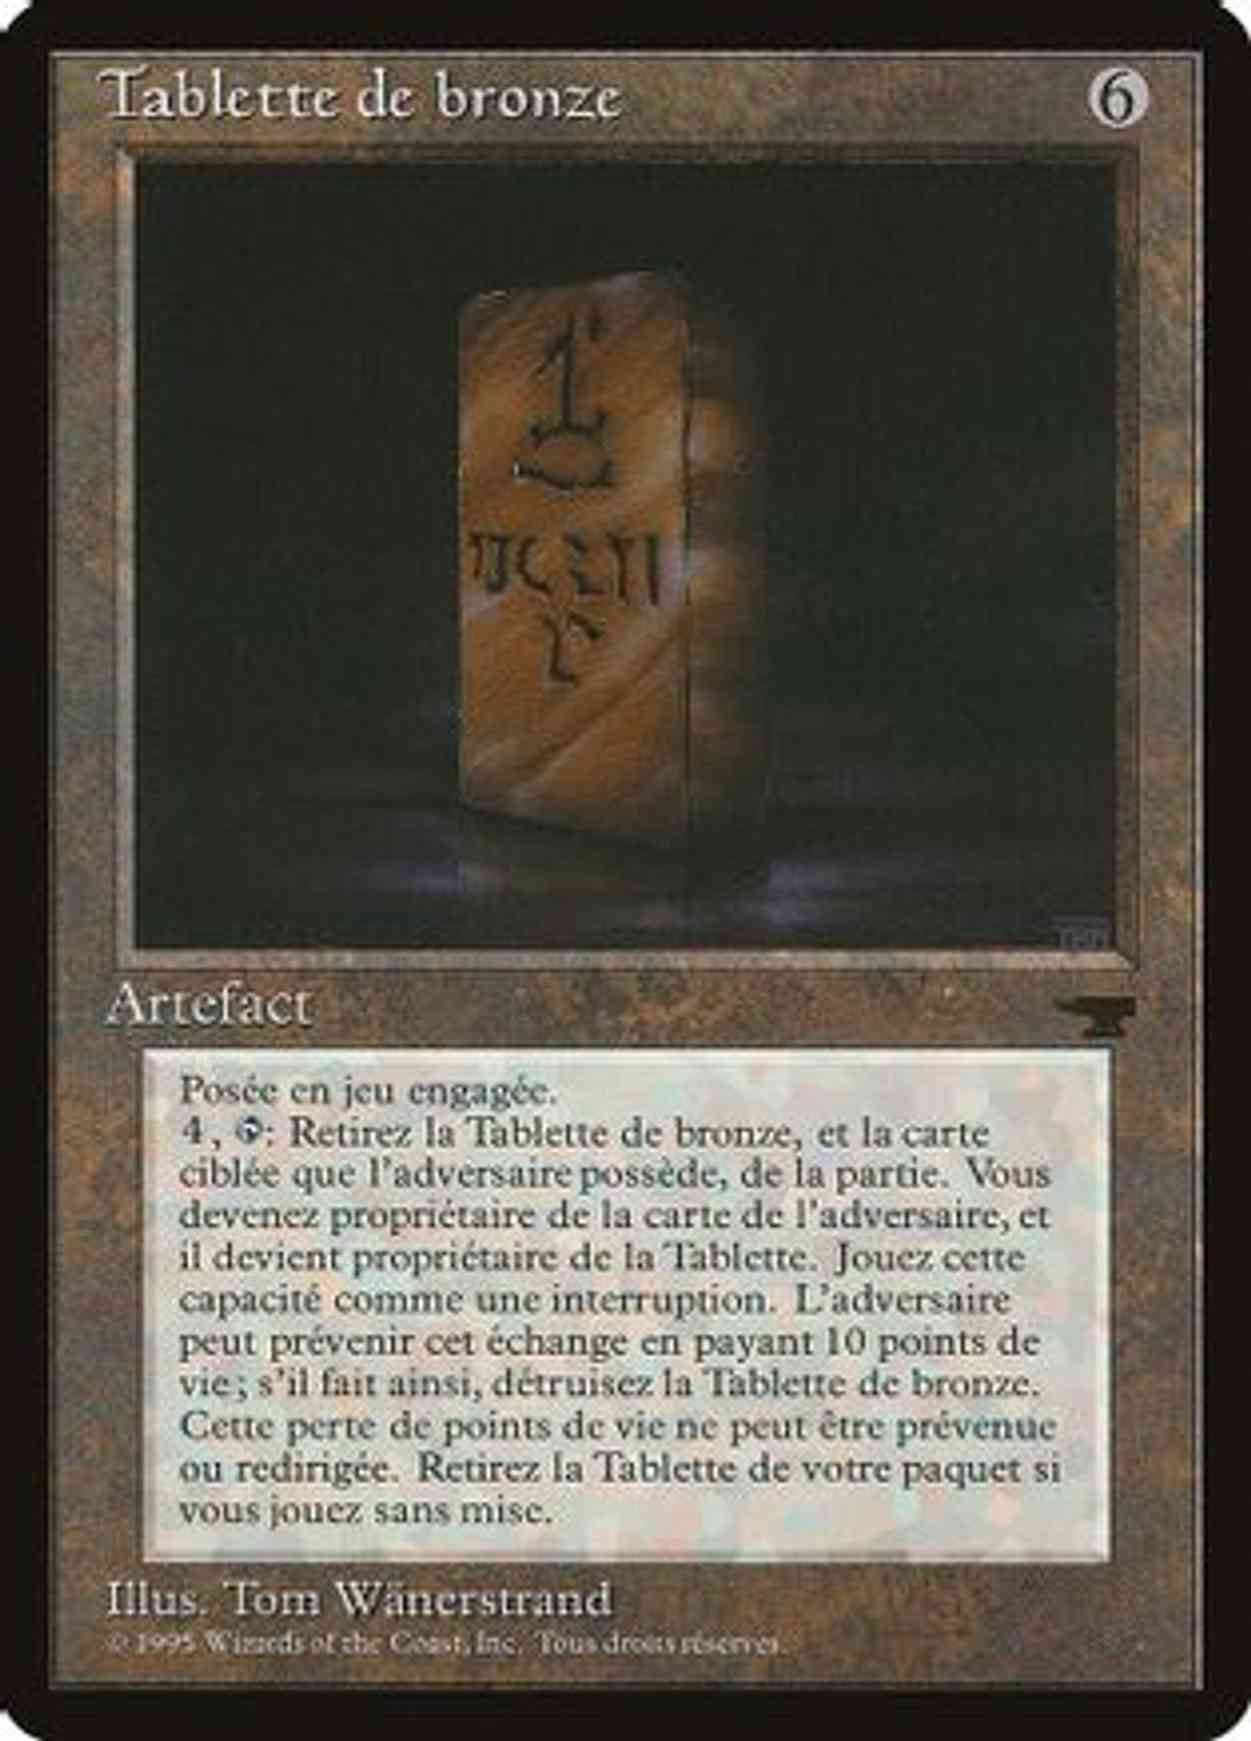 Bronze Tablet (French) - "Tablette de bronze" magic card front